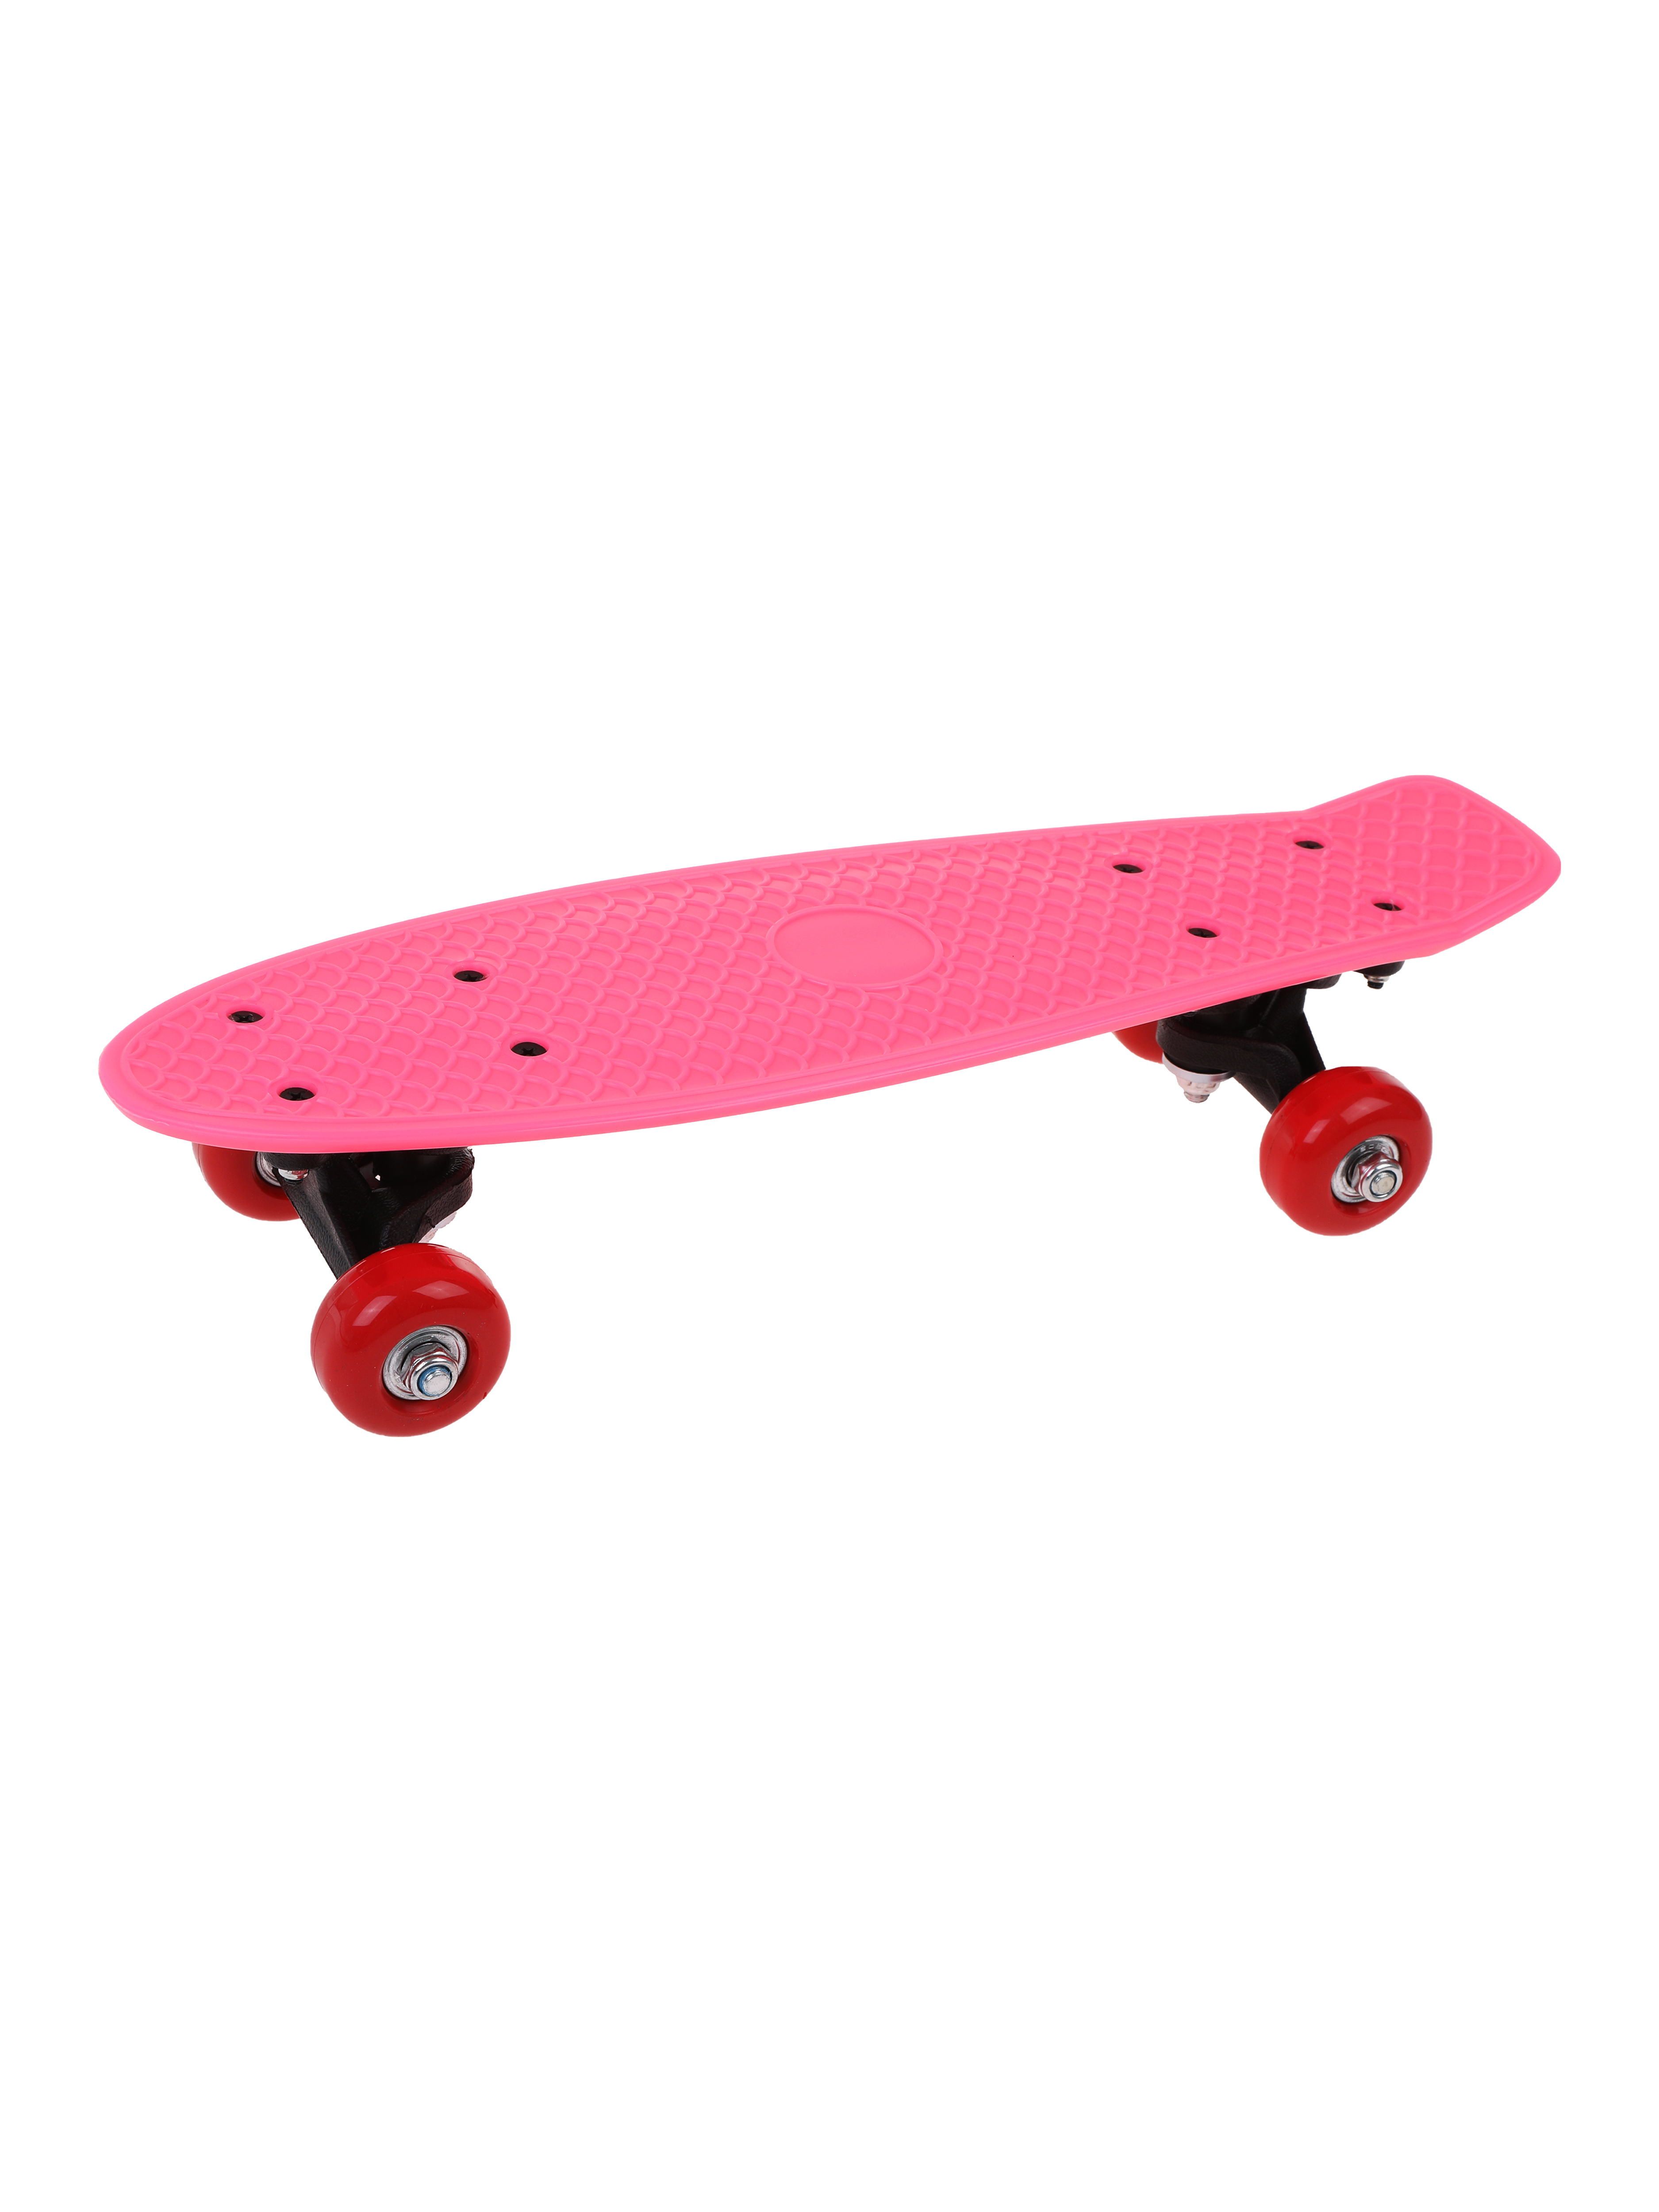 Скейтборд Наша Игрушка пенниборд пластик 41*12 см колеса PVC крепления пластик розовый - фото 5